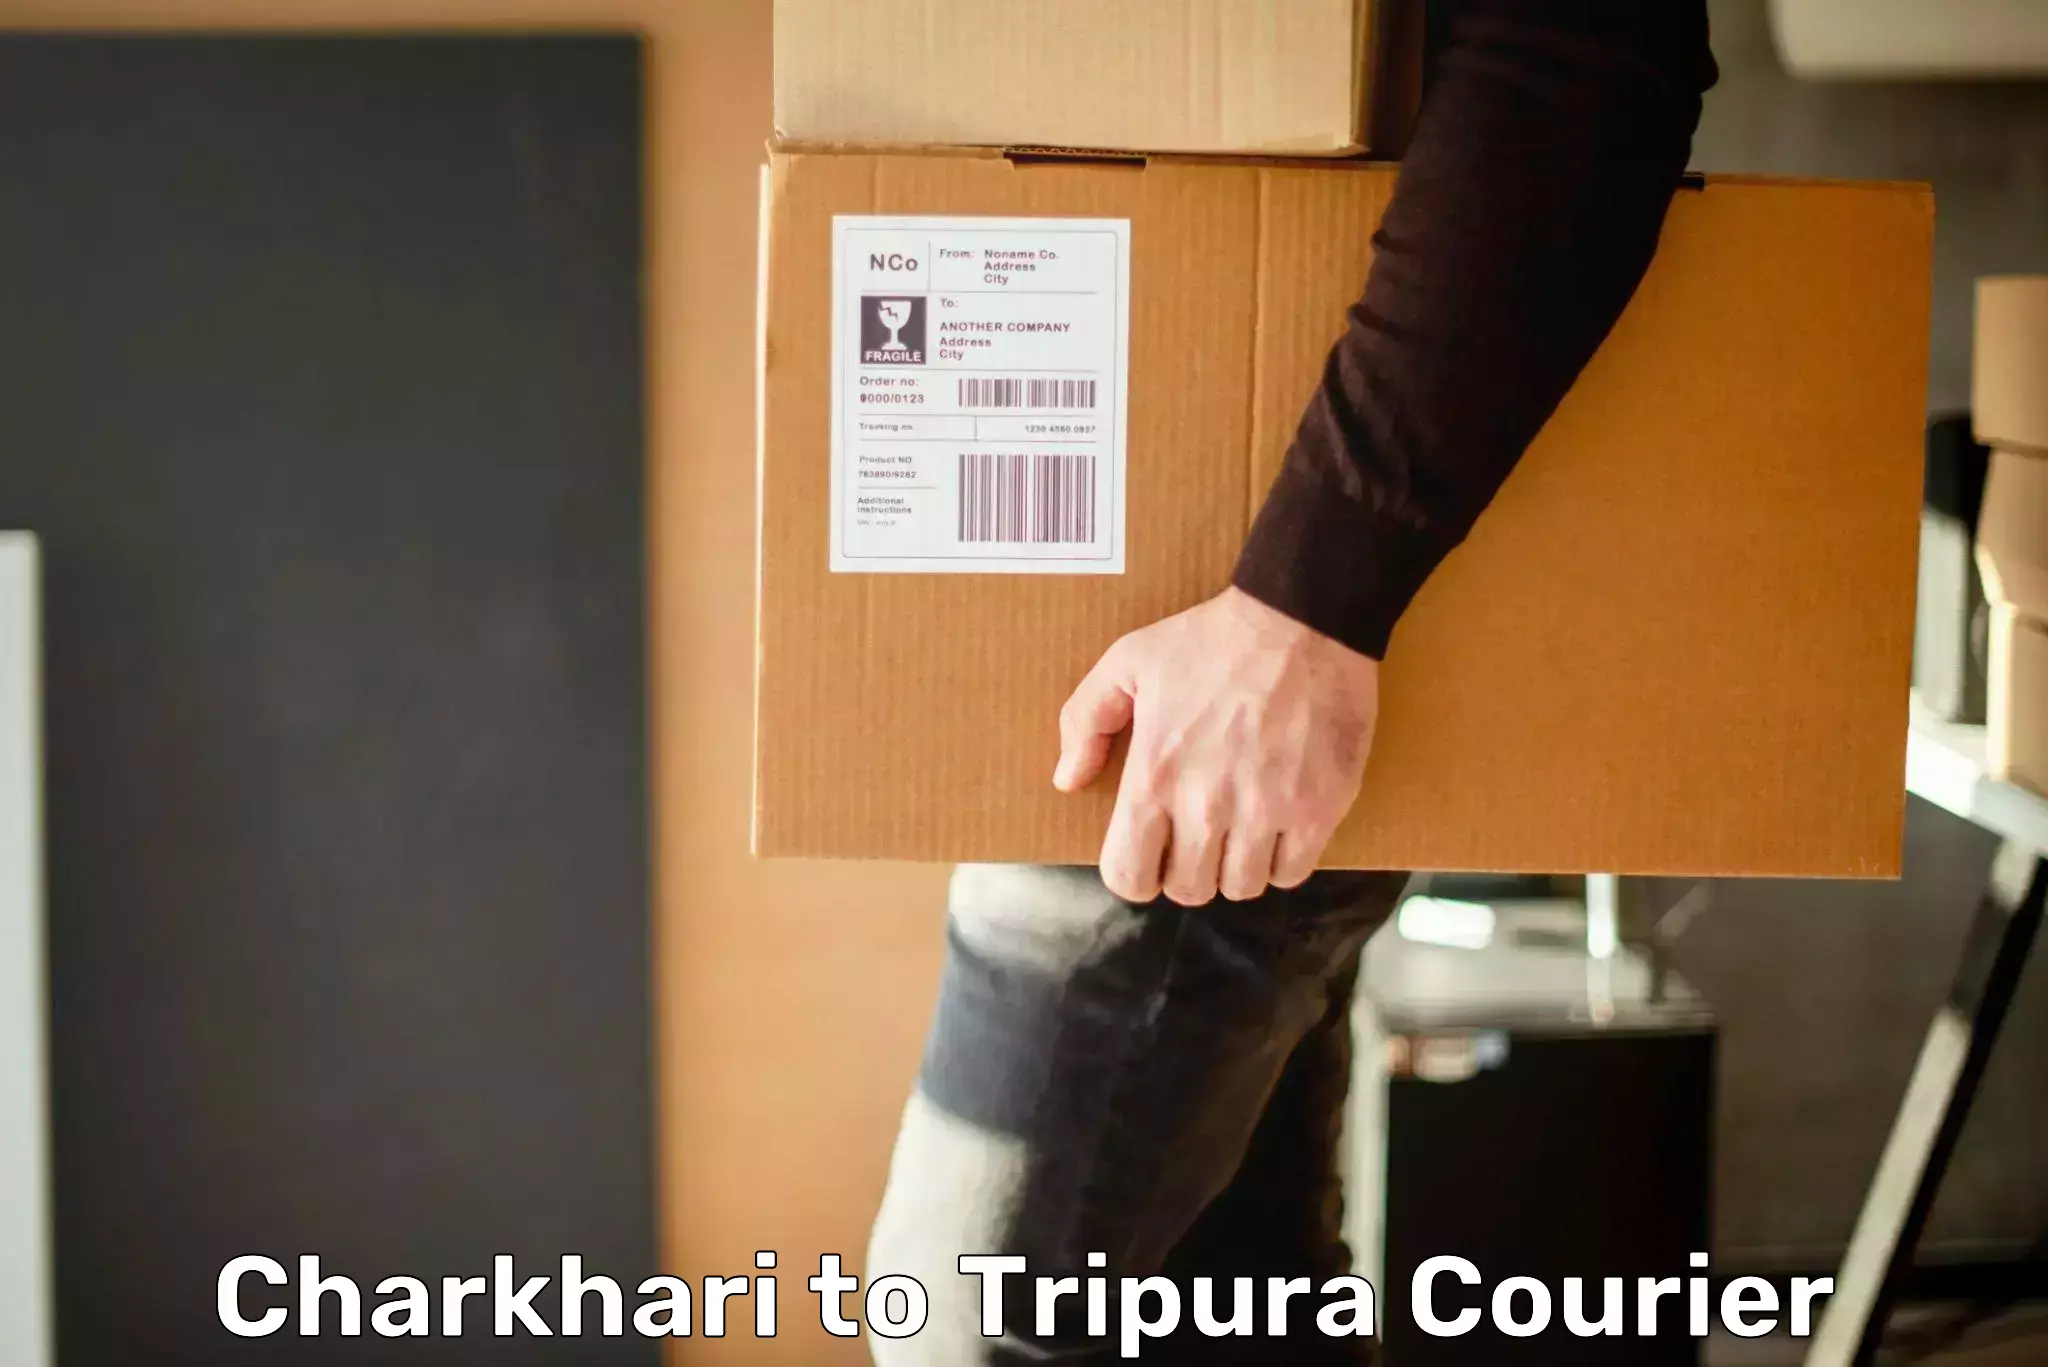 Discounted shipping Charkhari to Udaipur Tripura